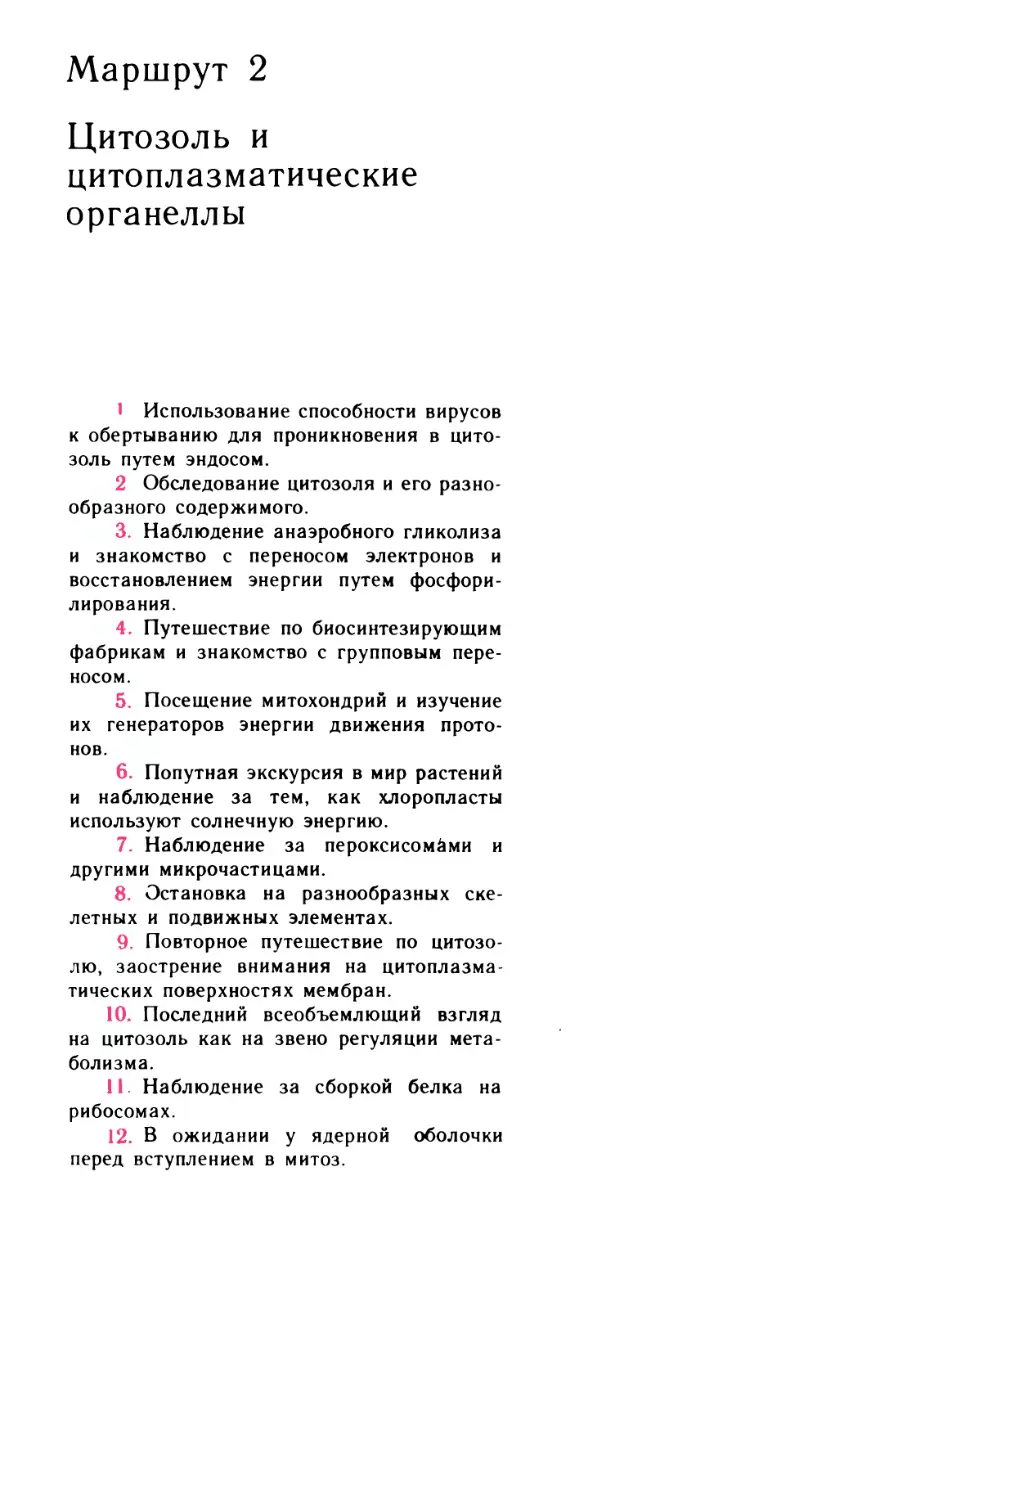 Маршрут 2. Цитозоль и цитоплазматические органеллы